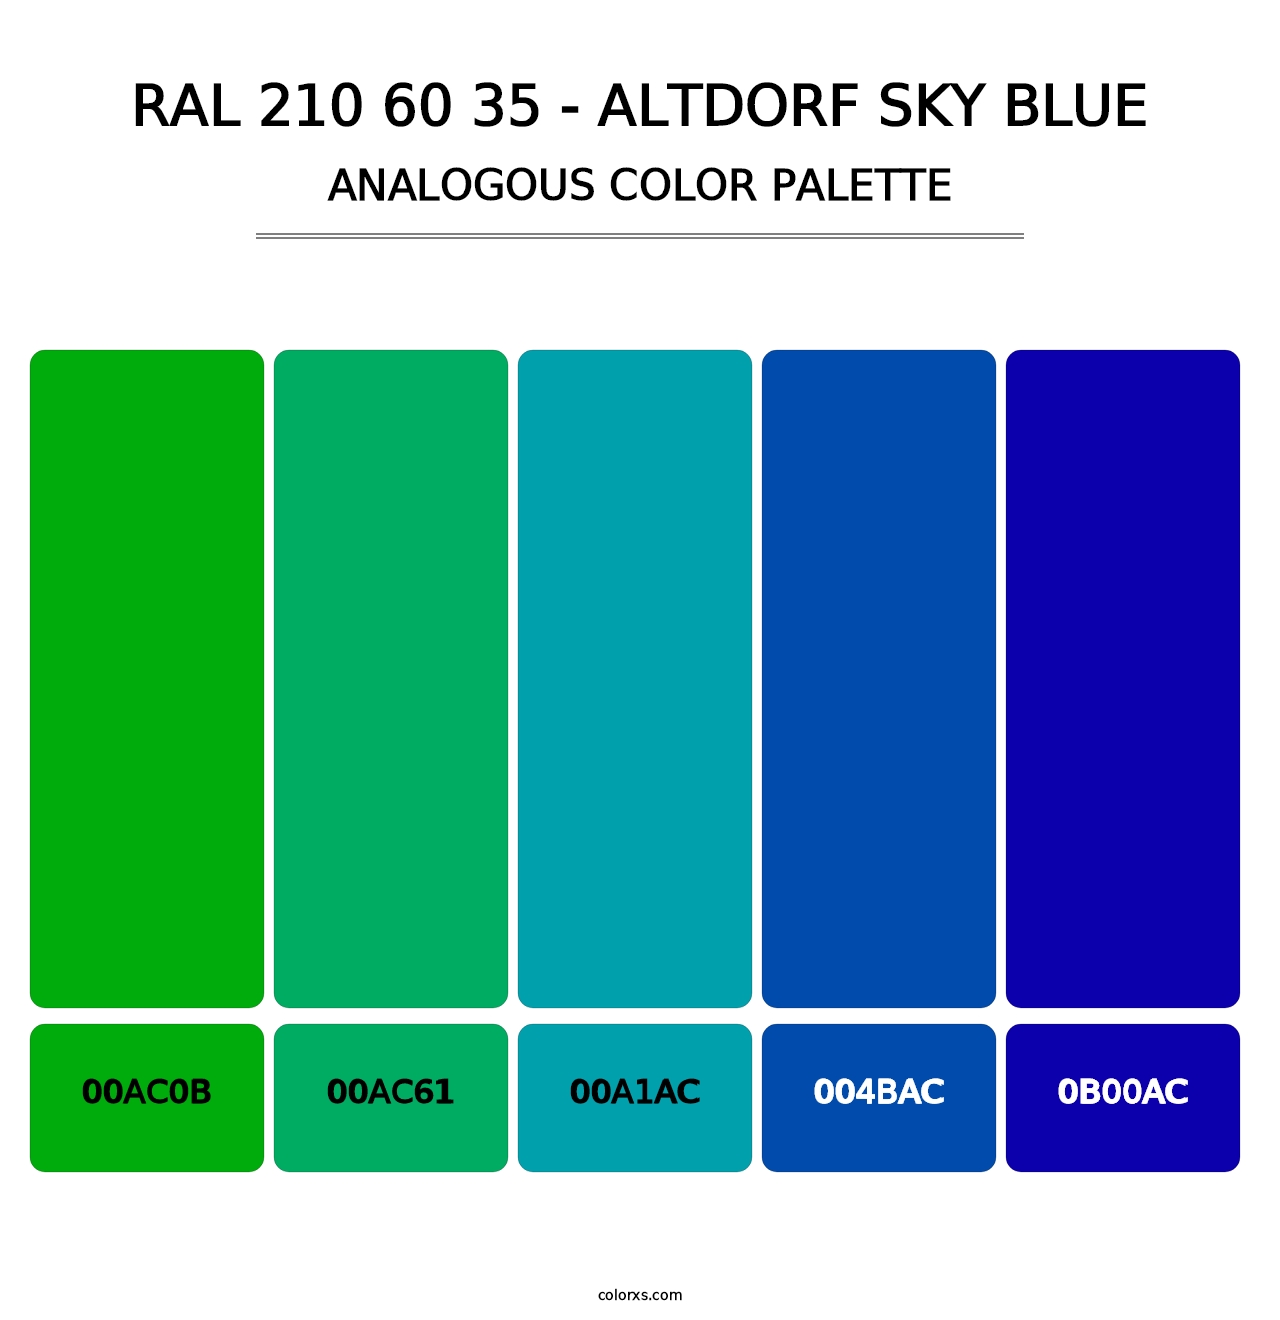 RAL 210 60 35 - Altdorf Sky Blue - Analogous Color Palette